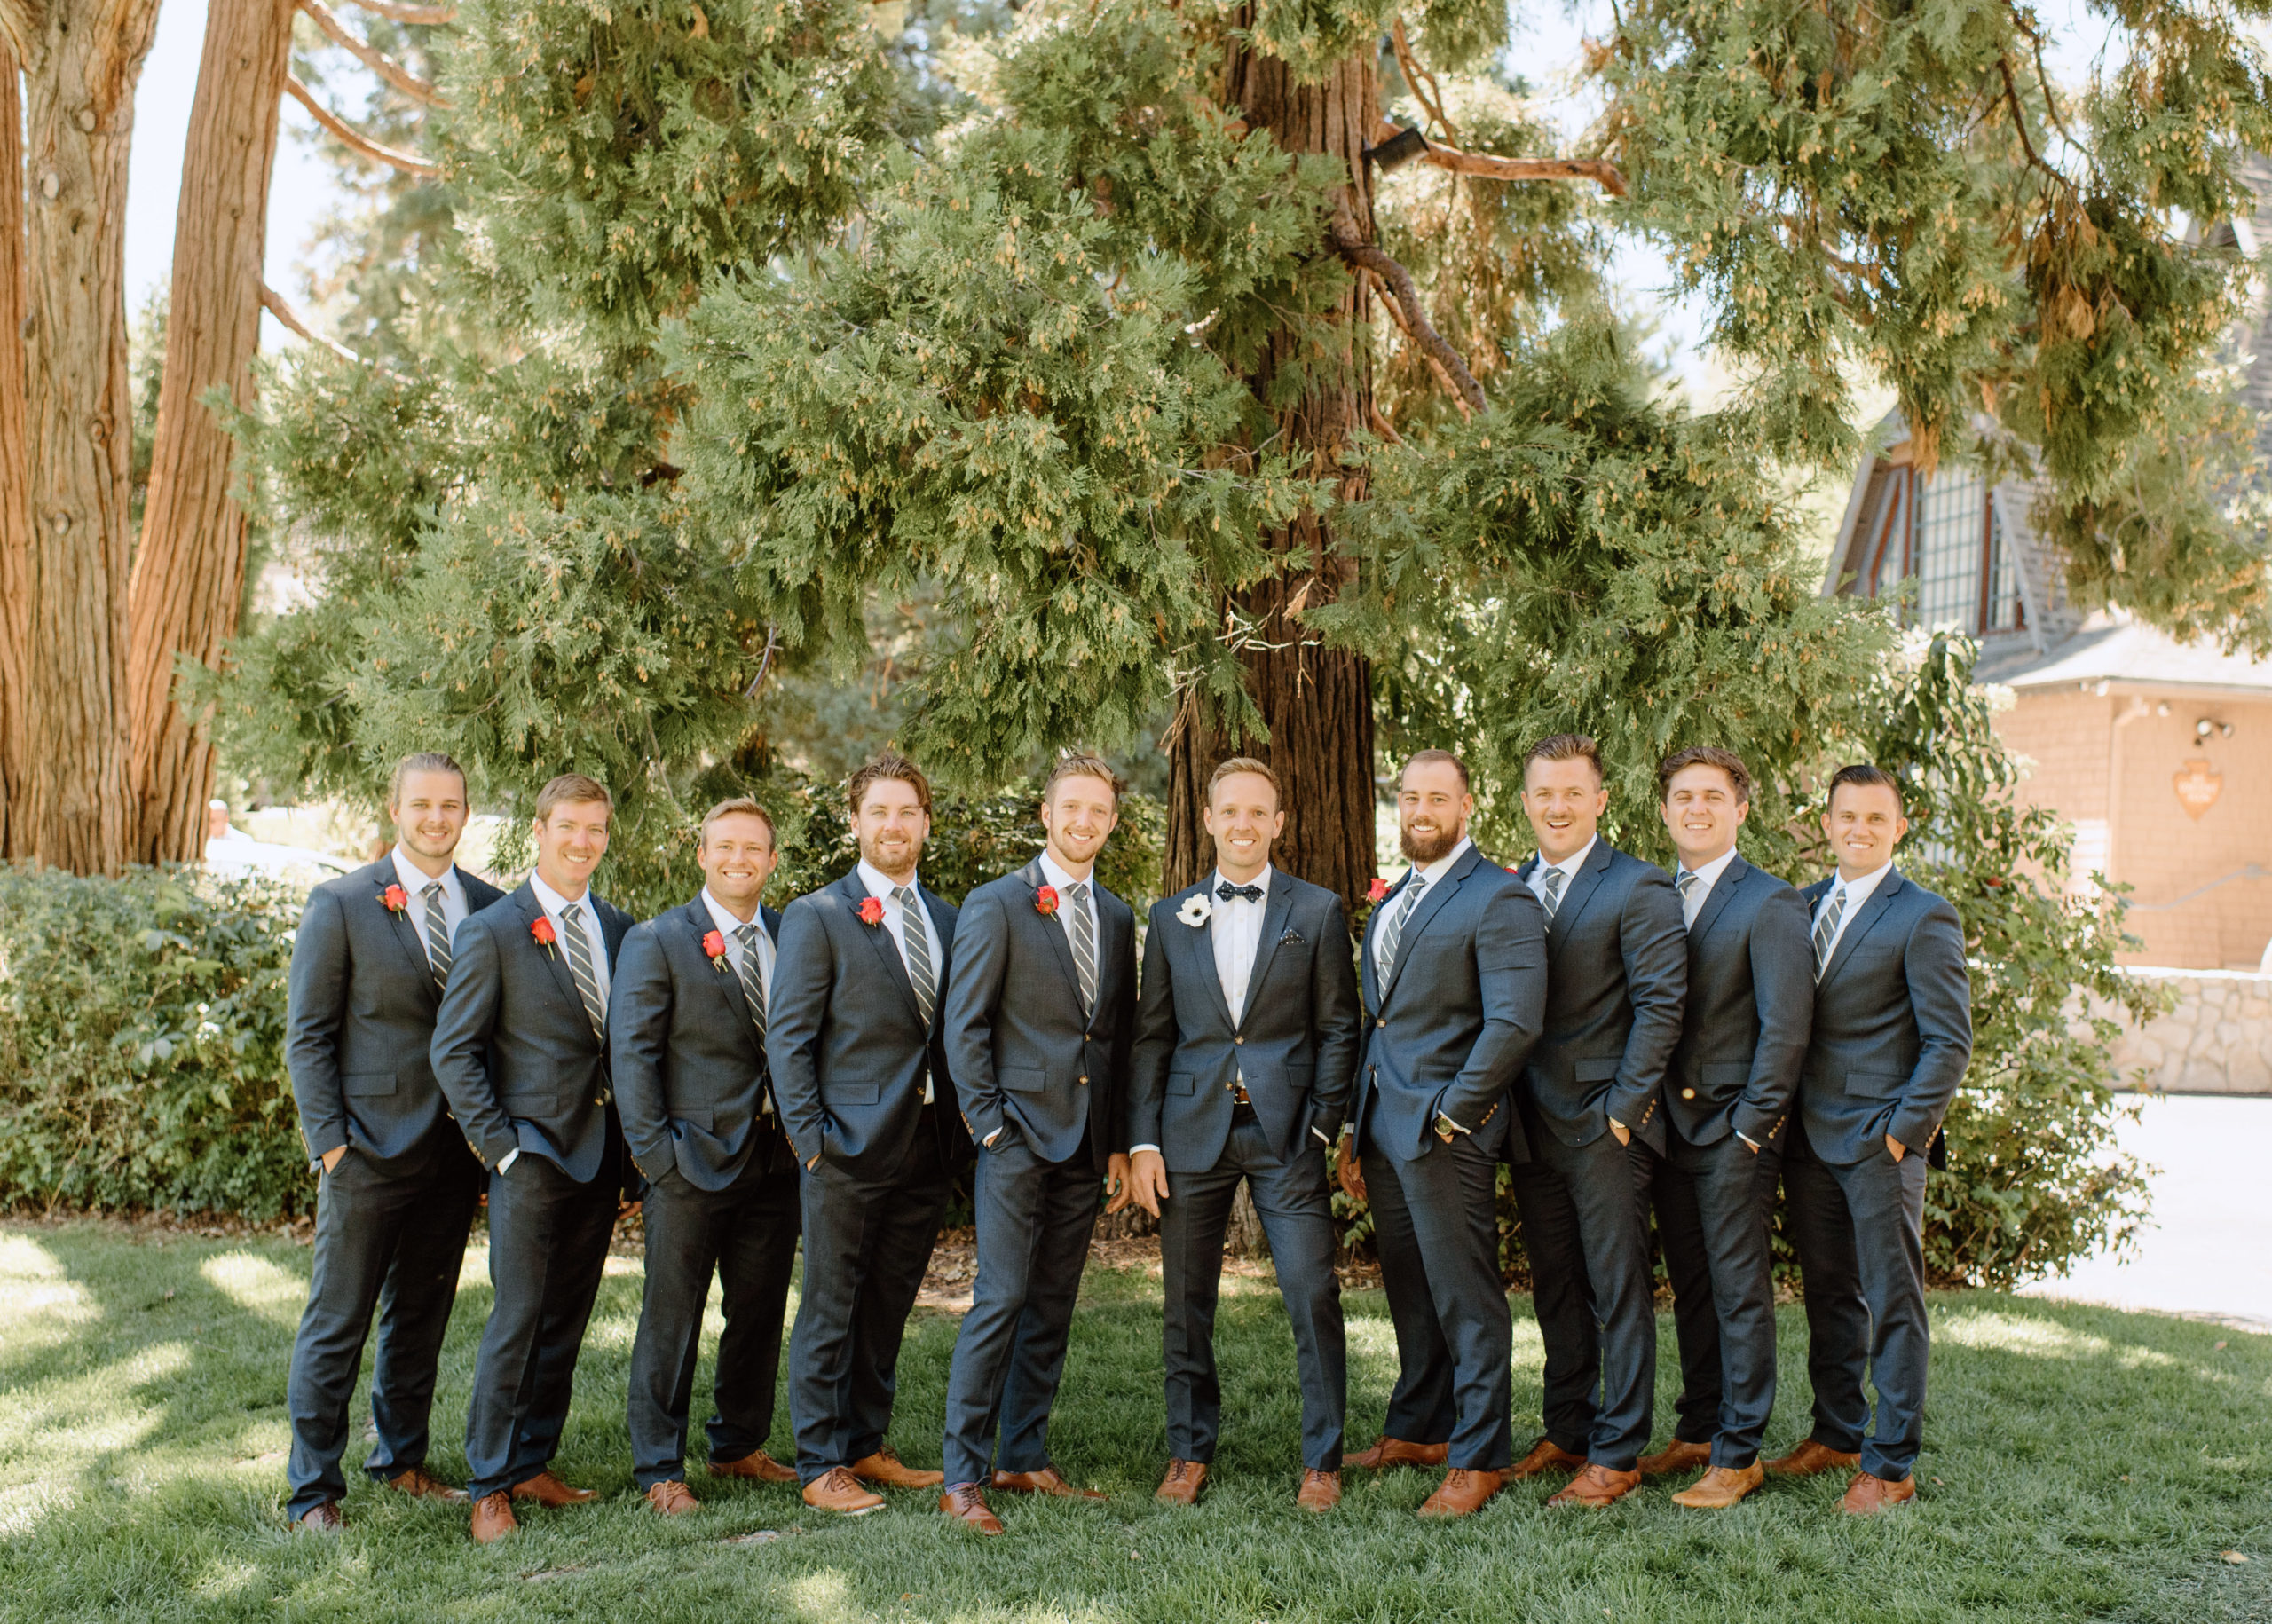 The groom and his groomsmen at the Lake Arrowhead wedding